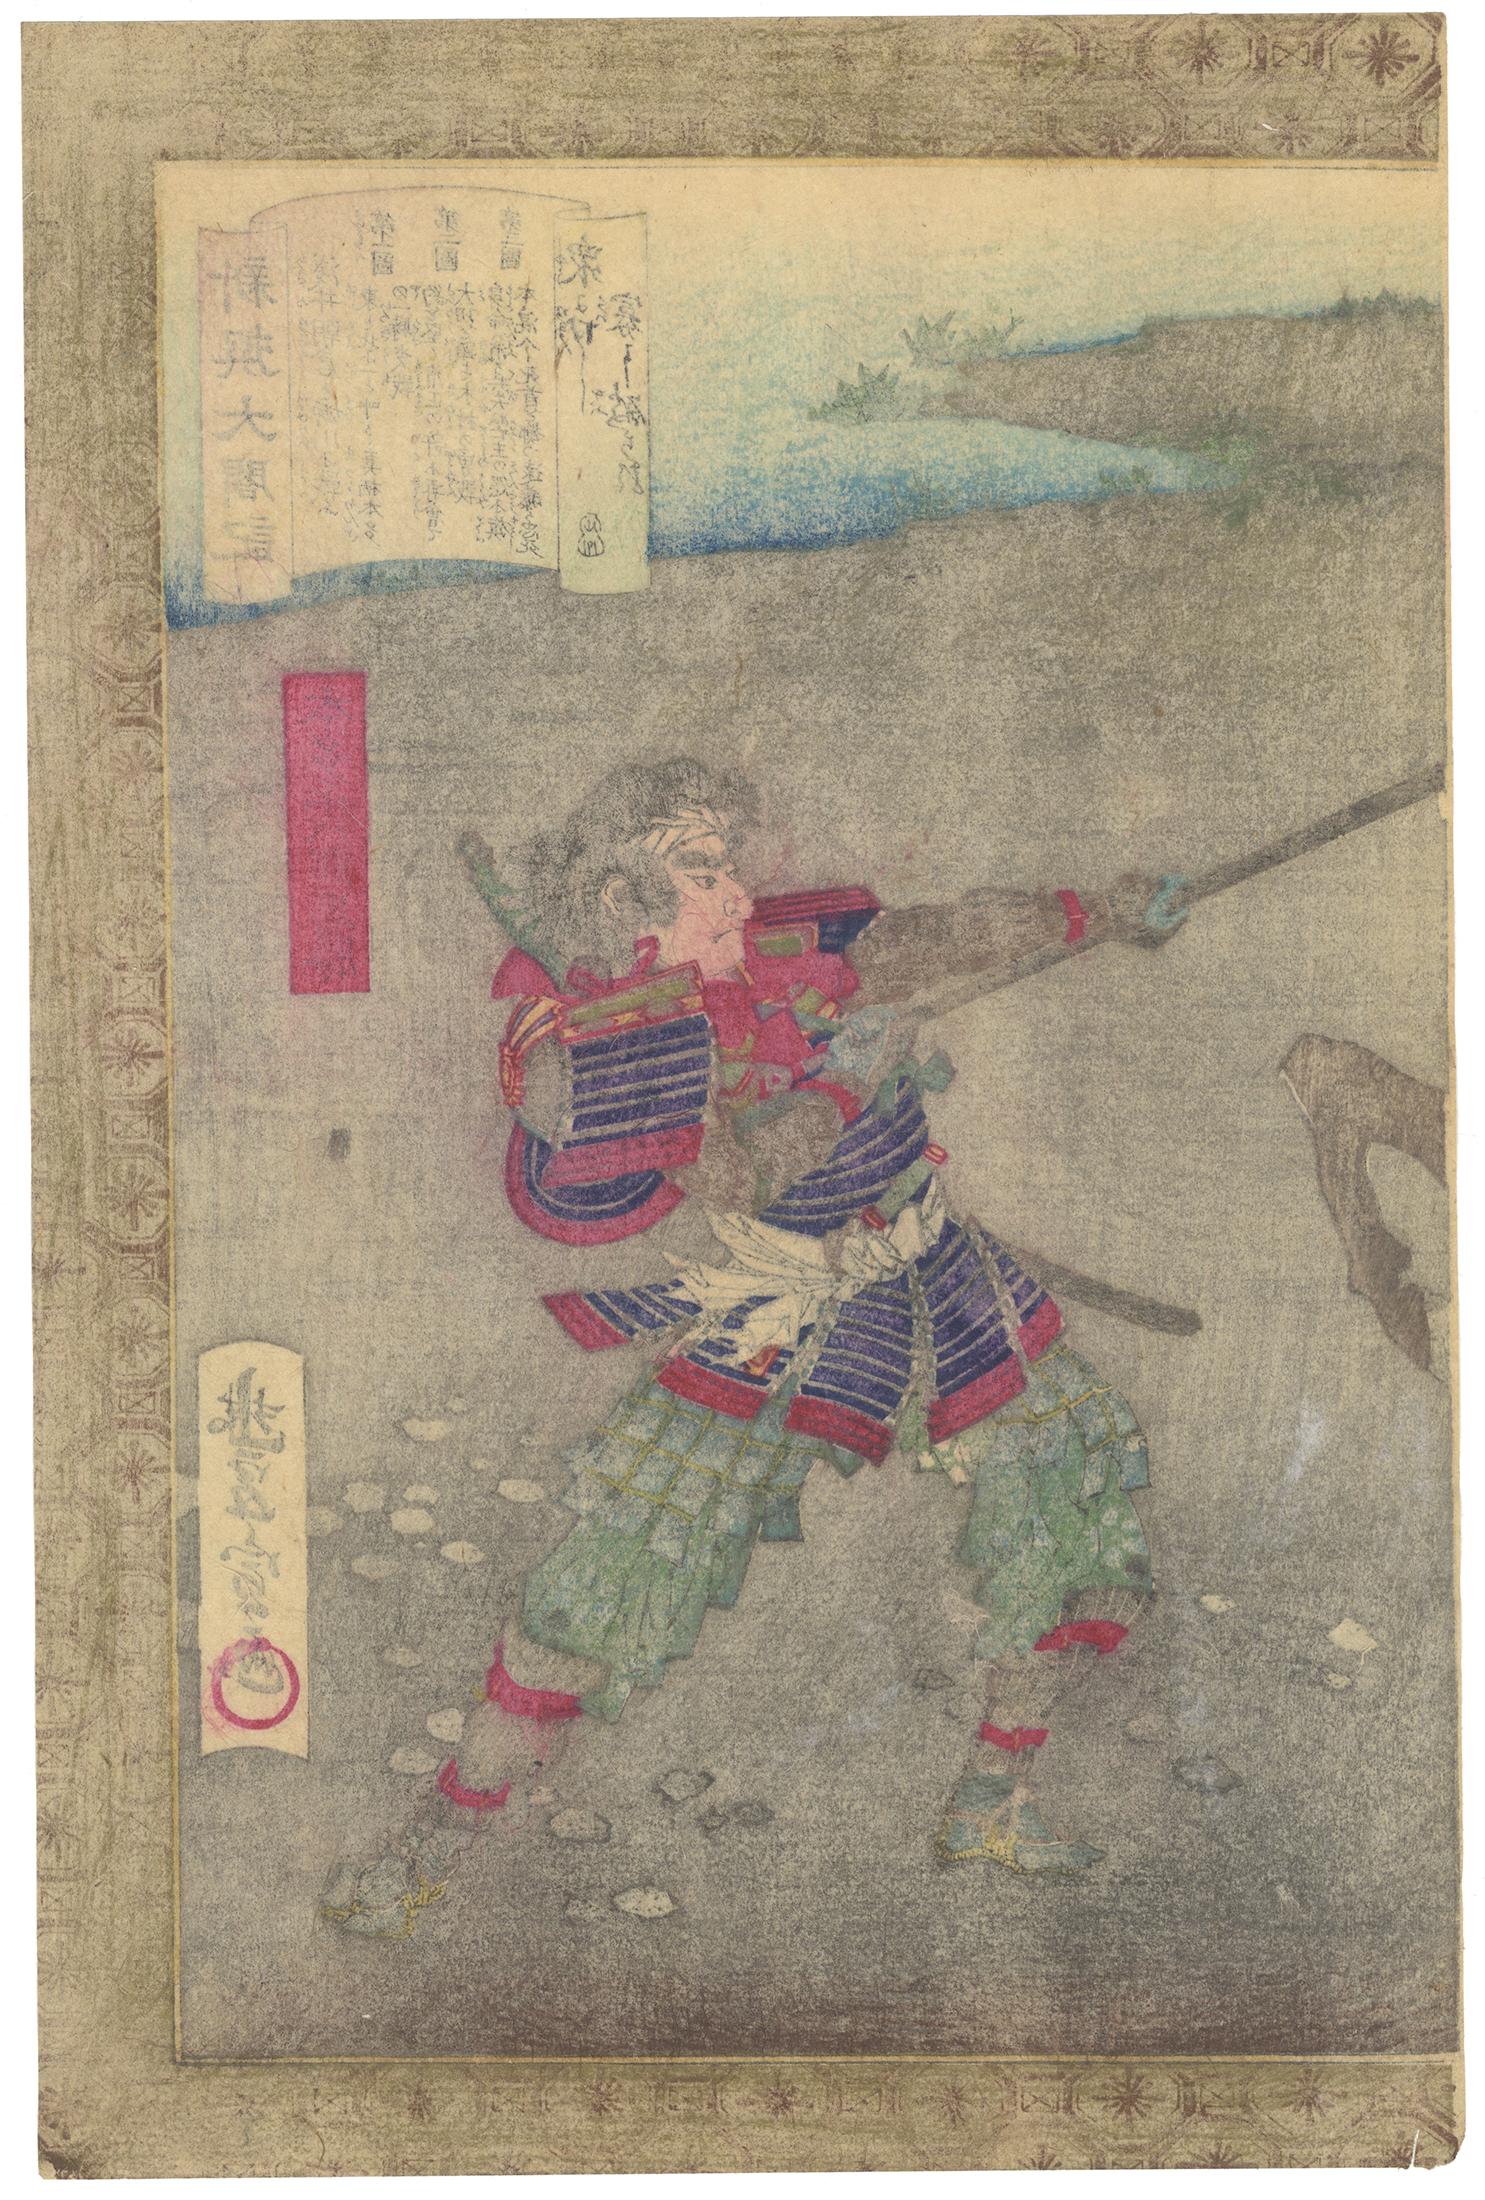 Artist: Toyonobu Utagawa (1859-1896)
Title: Magara Naotaka and Honda Heihachiro at the Battle of Anegawa
Series: The New Biography of Toyotomi Hideyoshi
Publisher: Matsuki Heikichi
Date: 1883
Dimensions: (L) 23.7 x 35.7 (R) 23.8 x 35.7 cm
Condition: